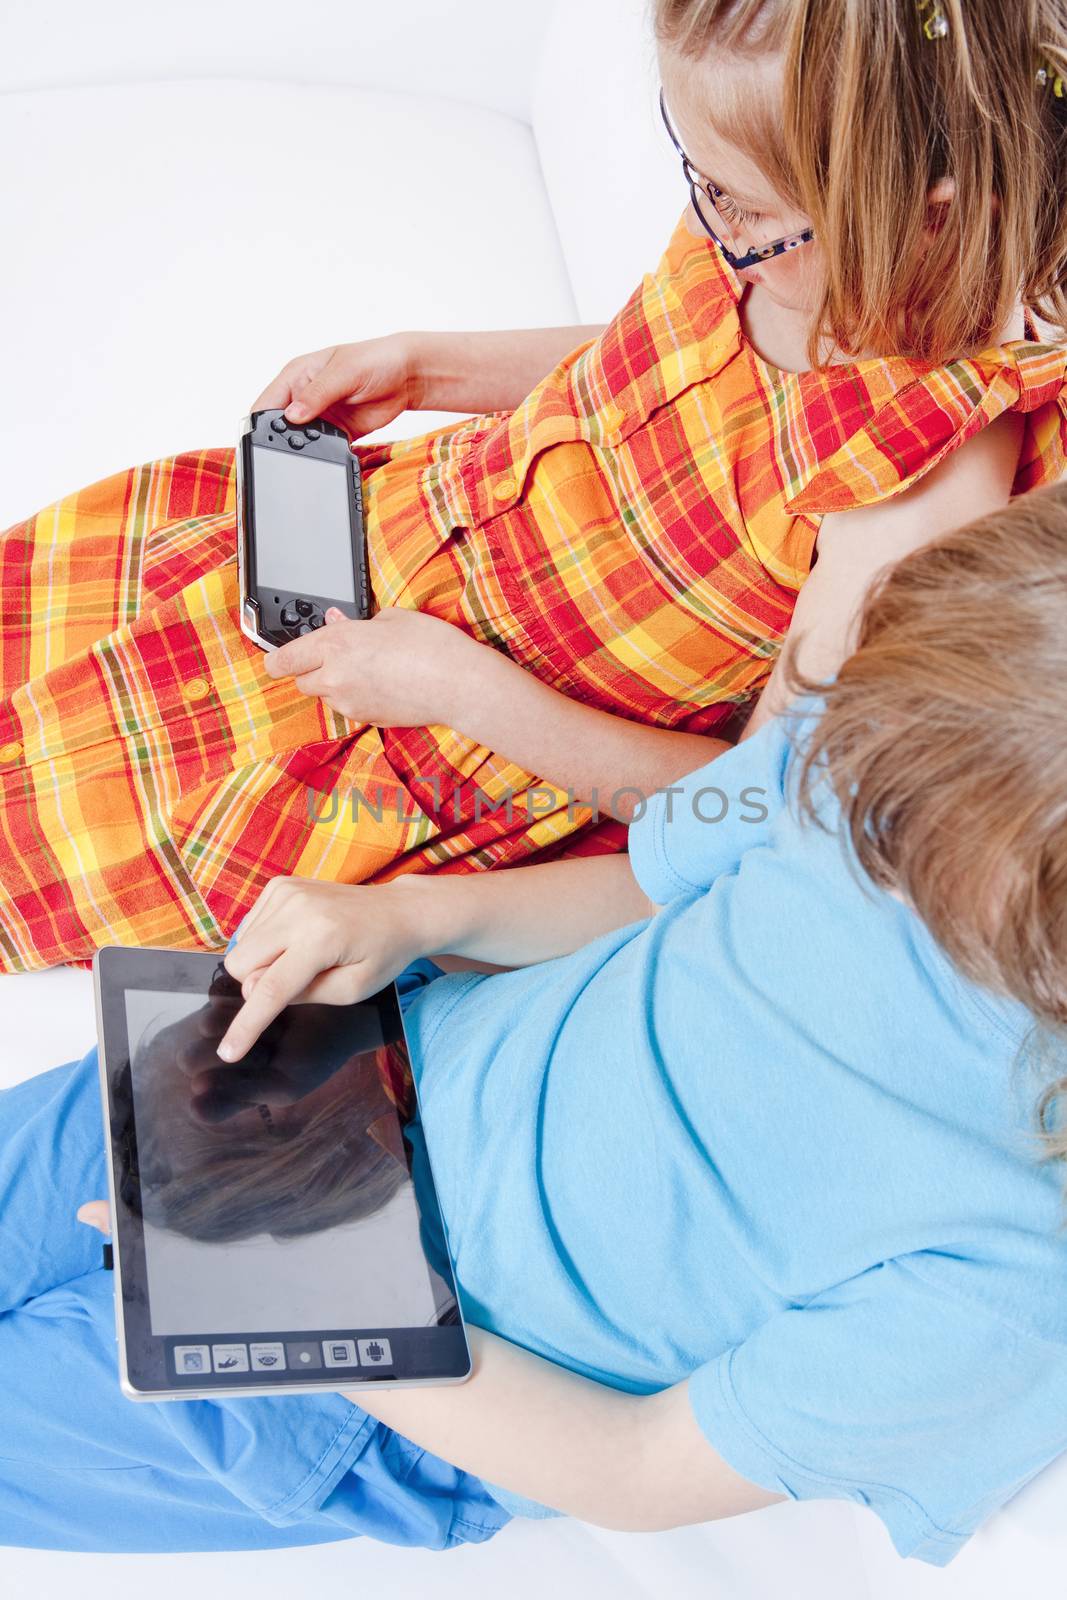 Two Children Having Fun with Digital Gadgets by courtyardpix